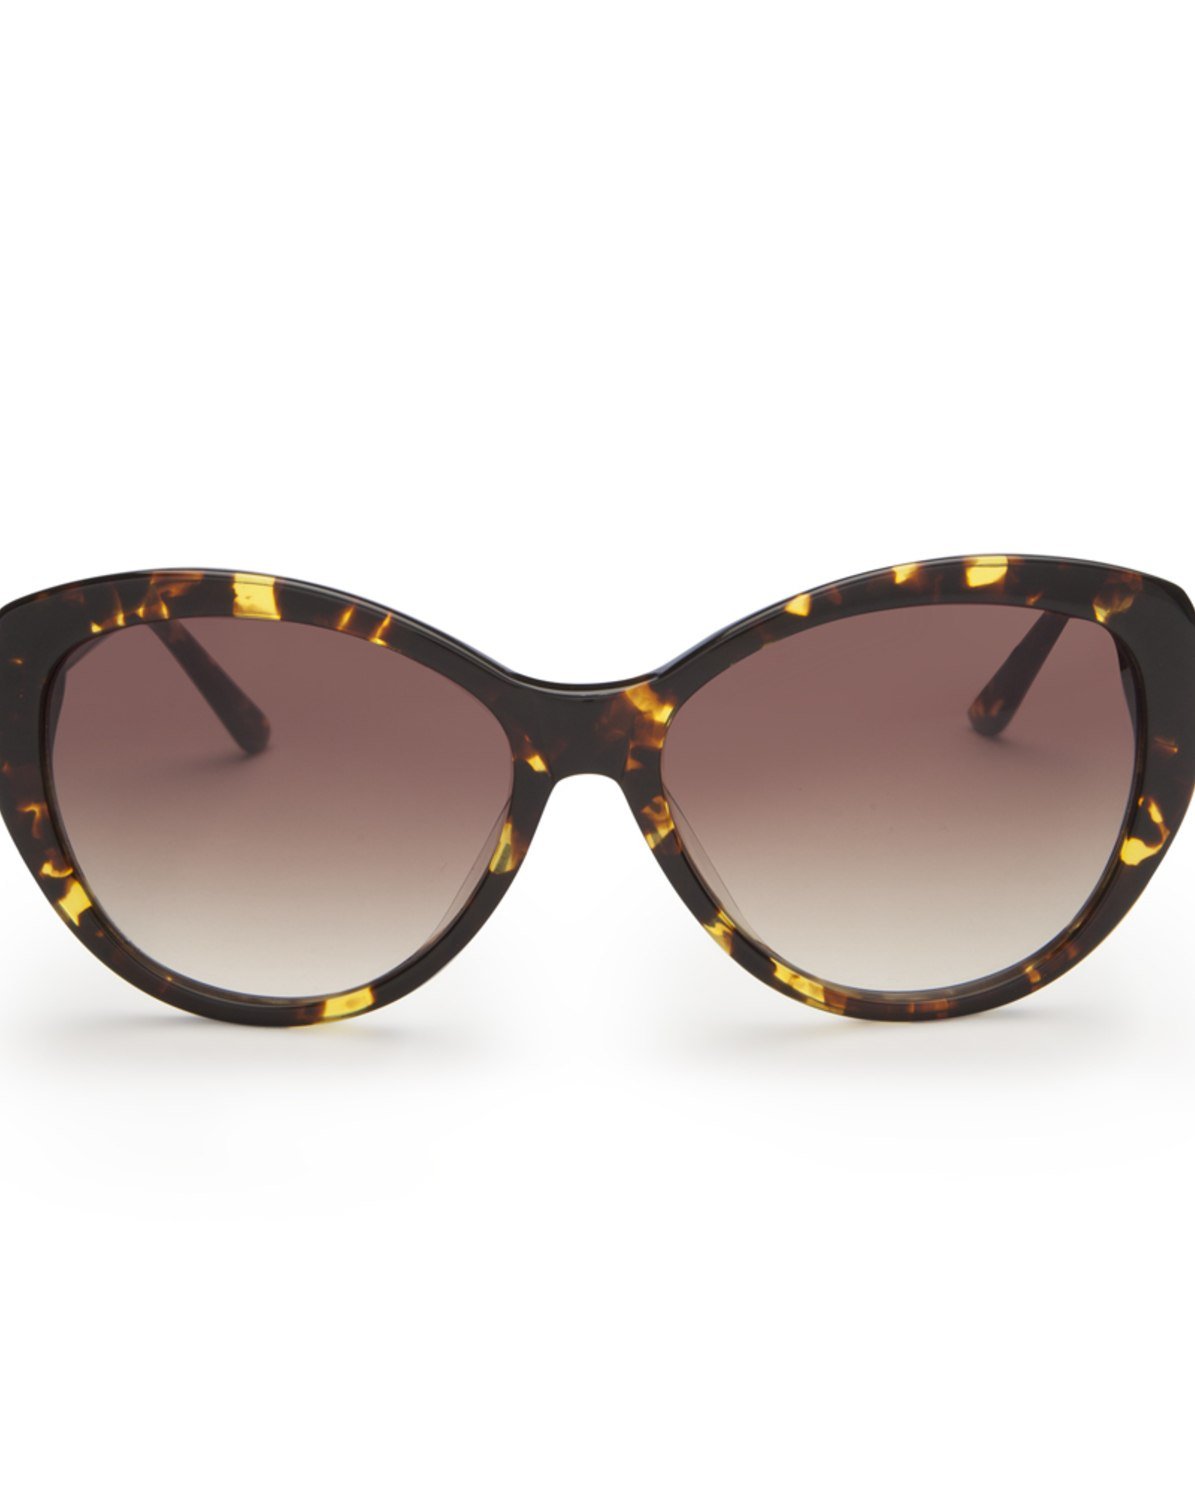 Olivia | Large Round Sunglasses | Made in USA Tokyo Tortoise / 55-22-140